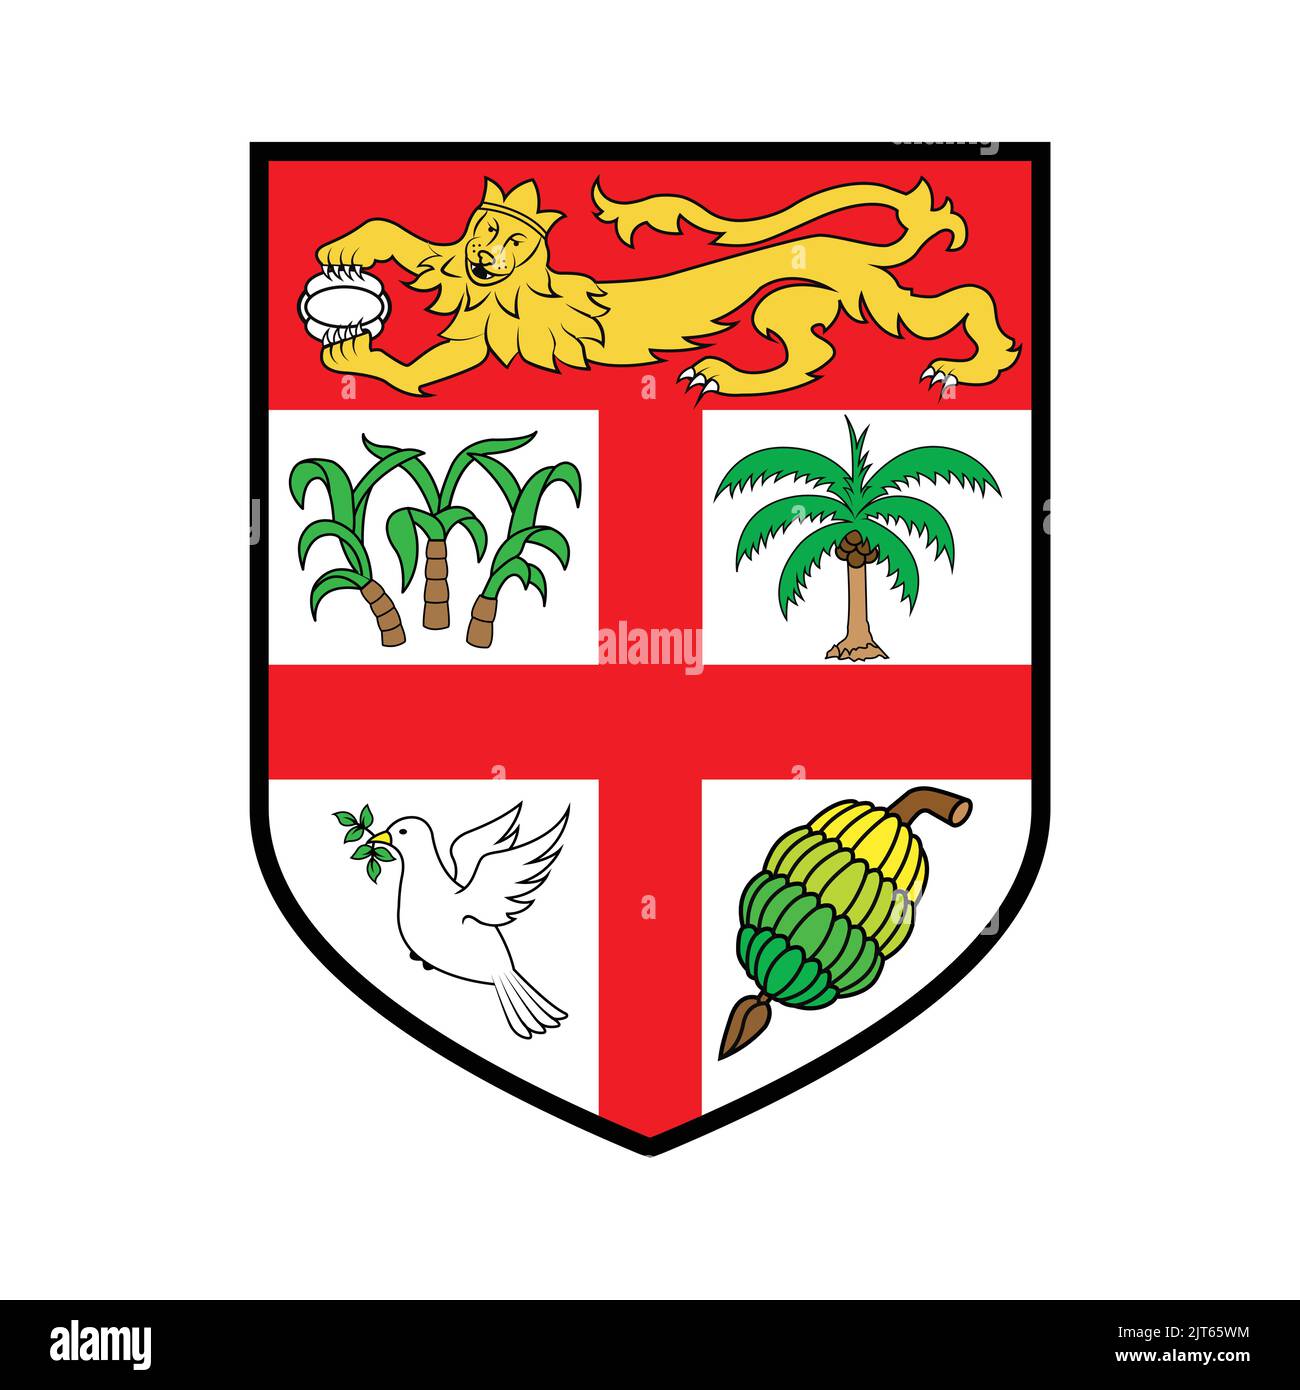 Wappen der Fidschi-Inseln - Nationalsymbol der Fidschi-Flagge - Vektor-Logo des Fidschi-Emblems - Wappen-Schild-Logo - Nationales Symbol des Fidschi-Landes - Löwe, Taube Stock Vektor